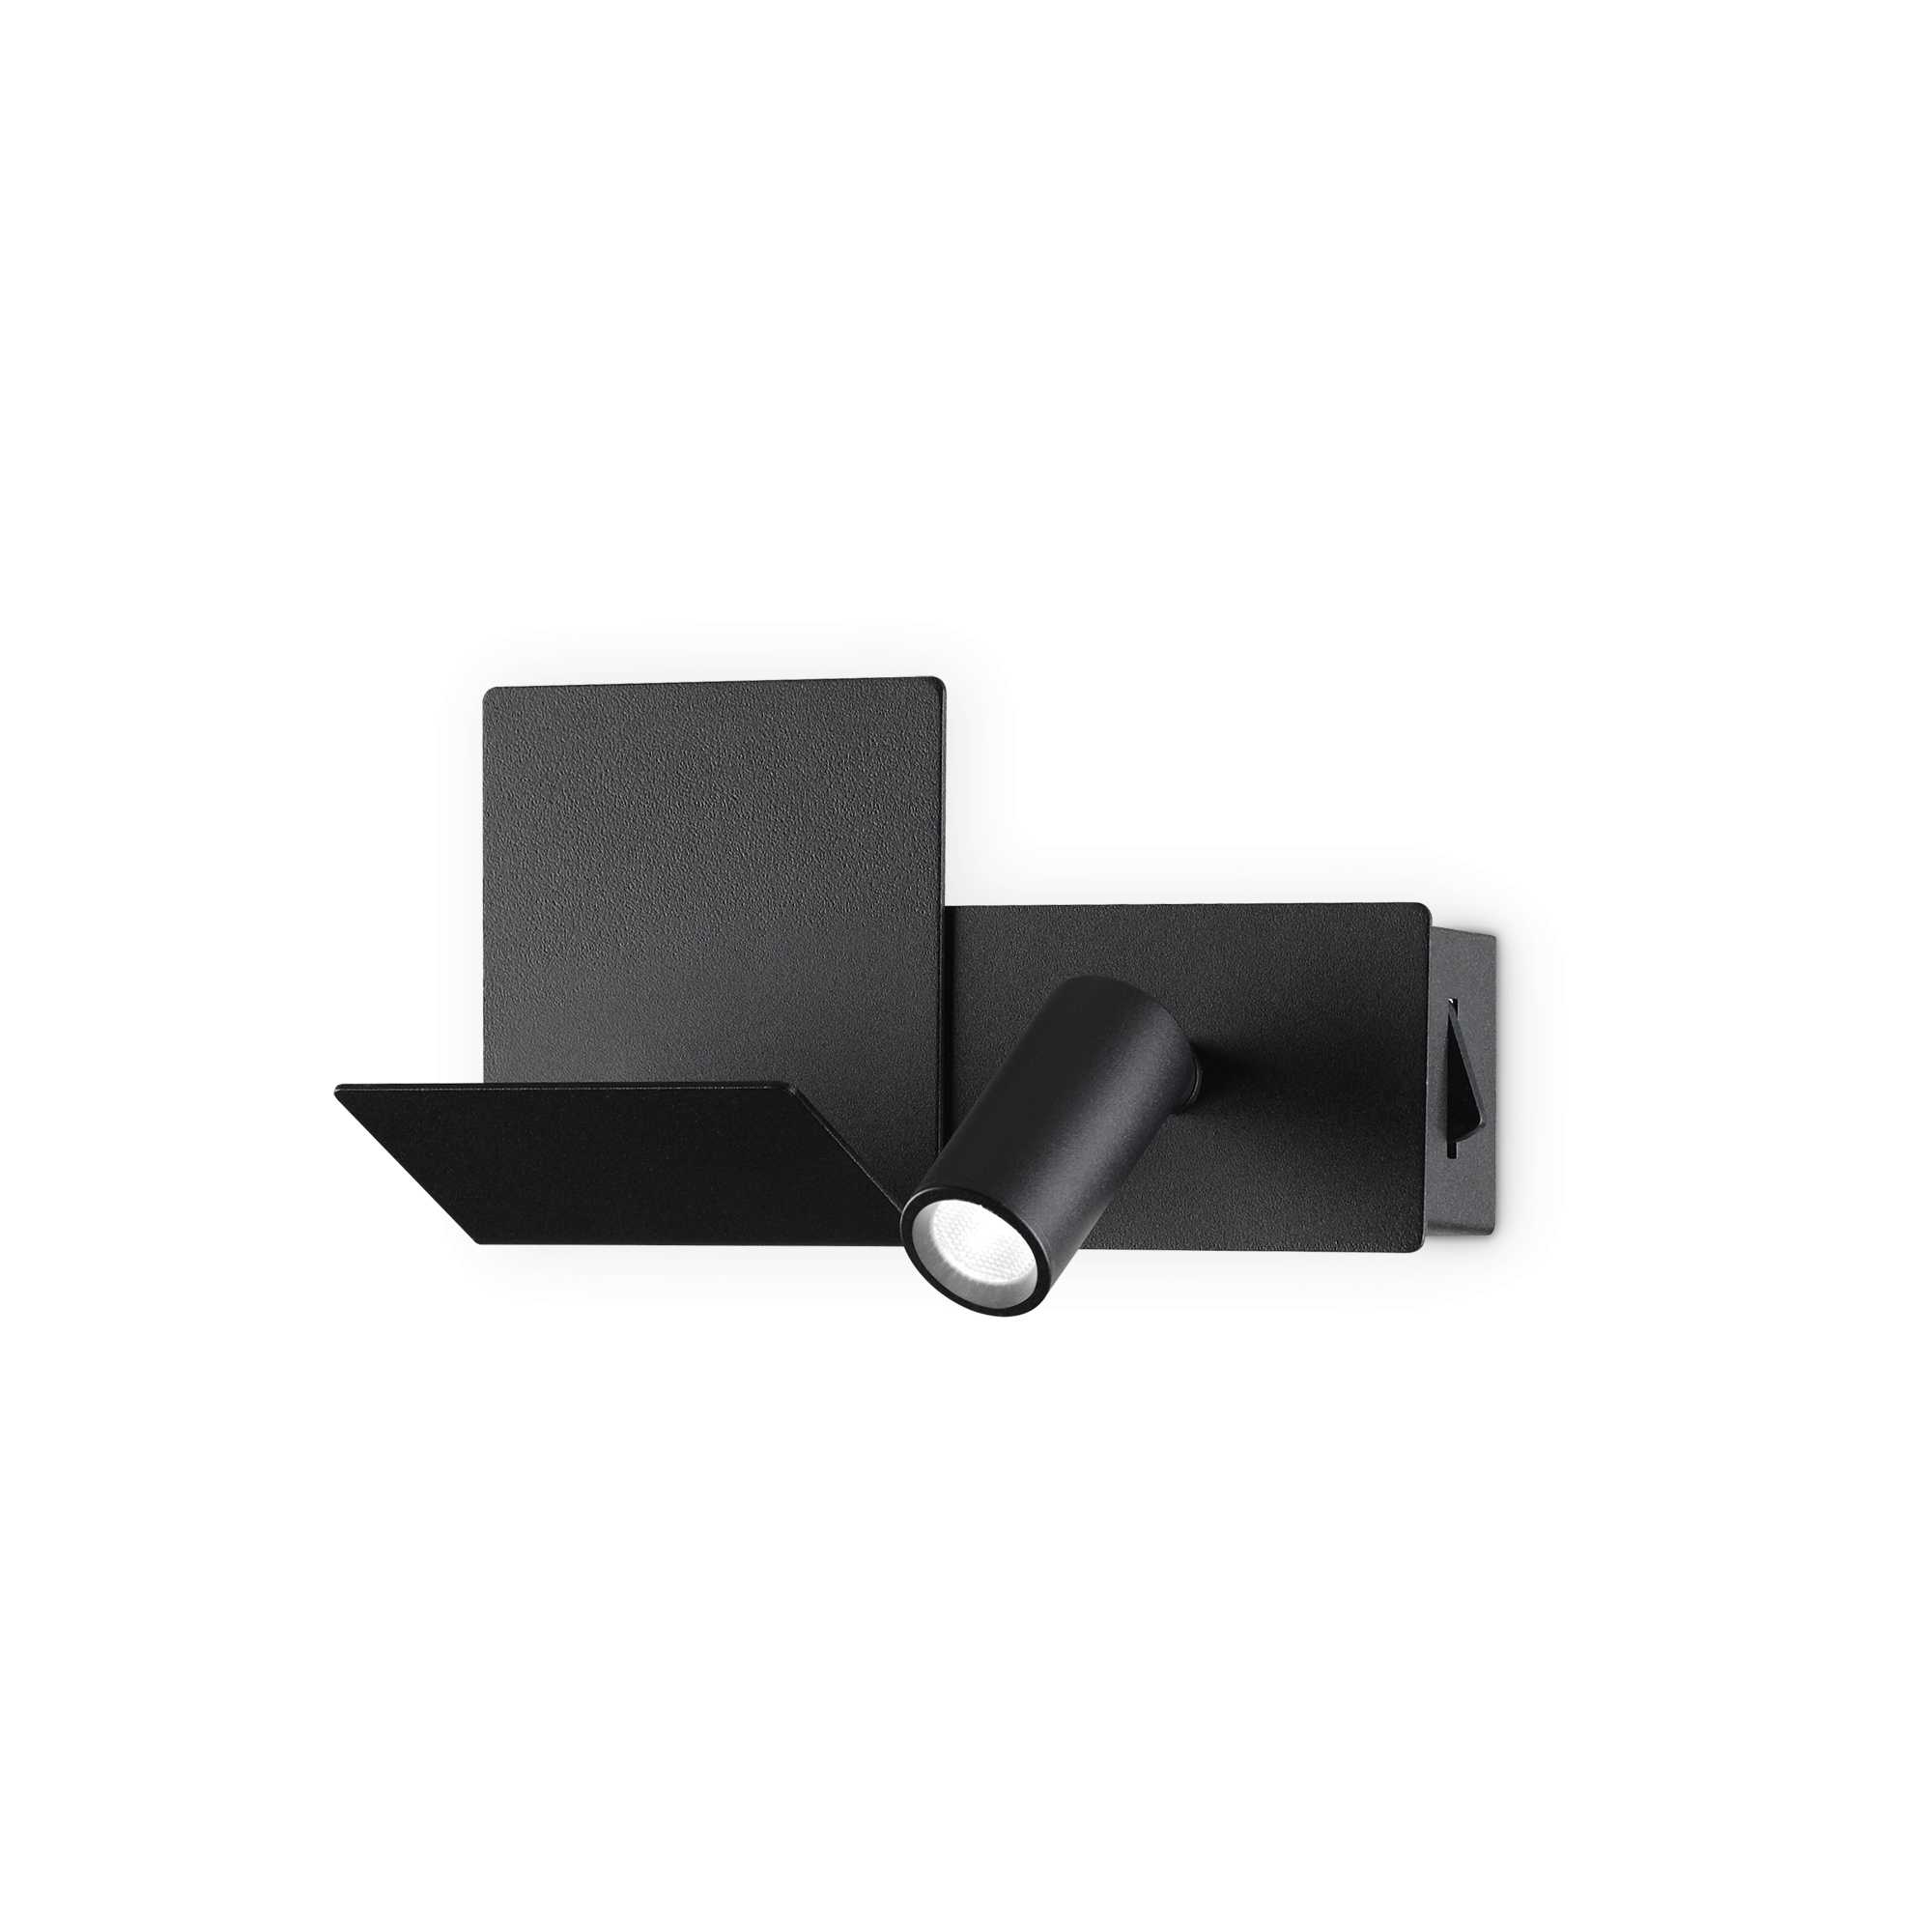 AD hotelska oprema Zidna lampa Komodo-2 ap- Crne boje slika proizvoda